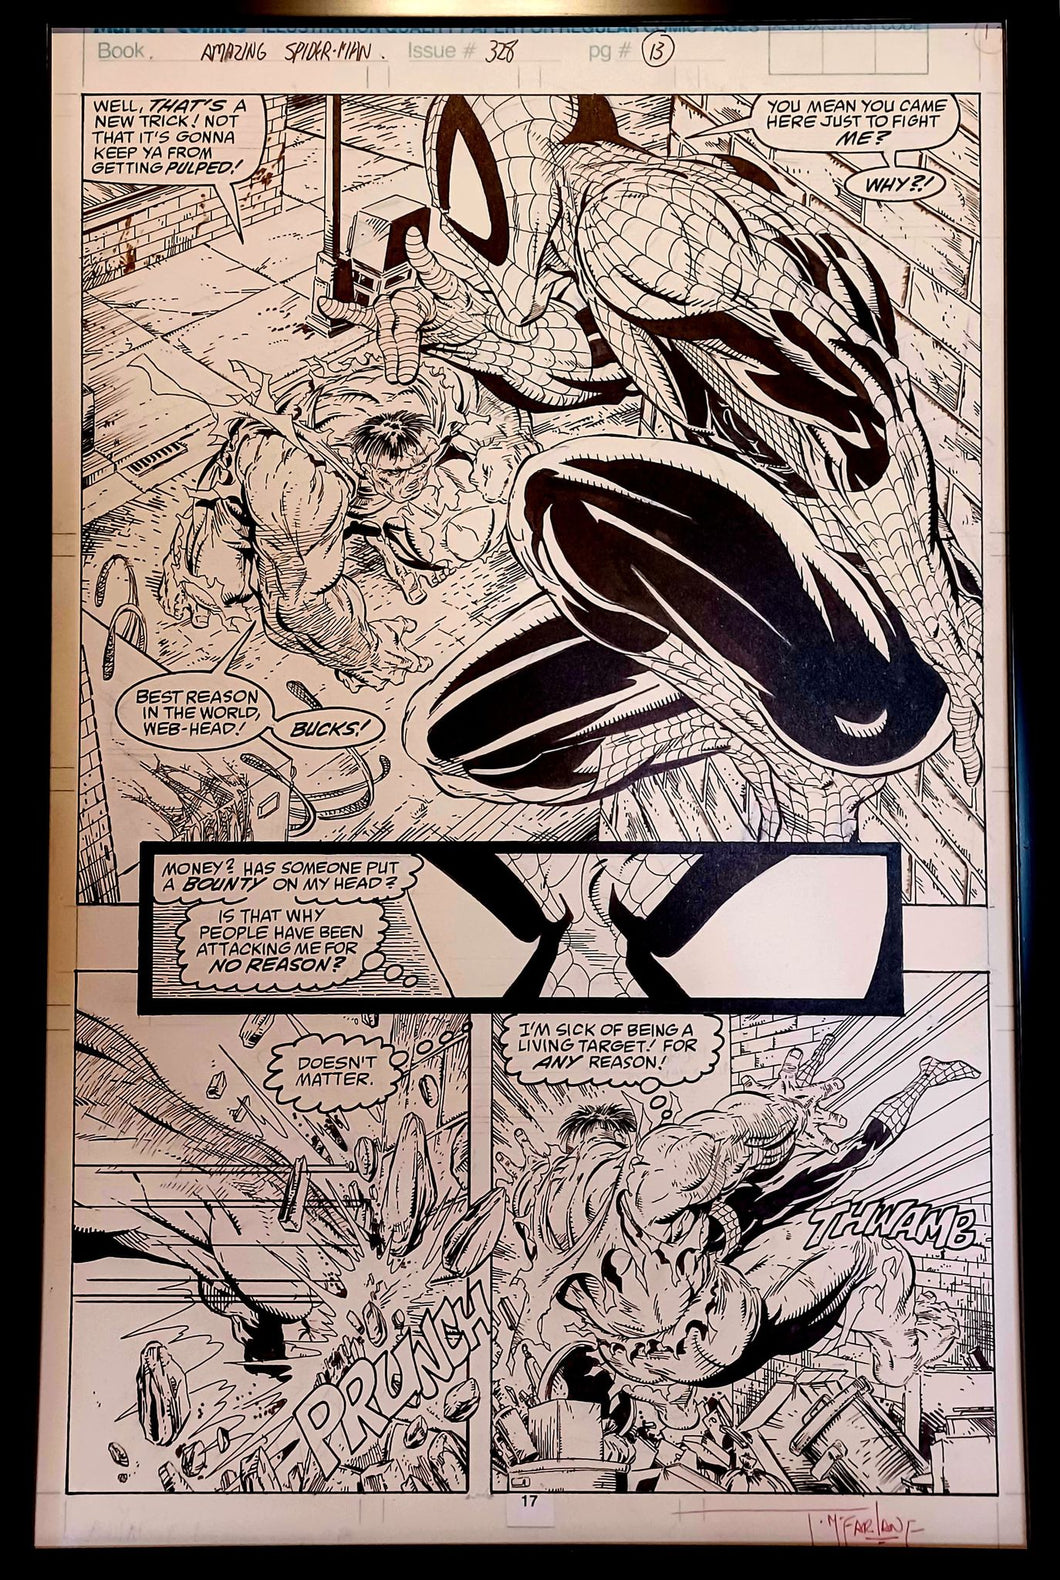 Amazing Spider-Man #328 pg. 13 by Todd McFarlane 11x17 FRAMED Original Art Print Comic Poster